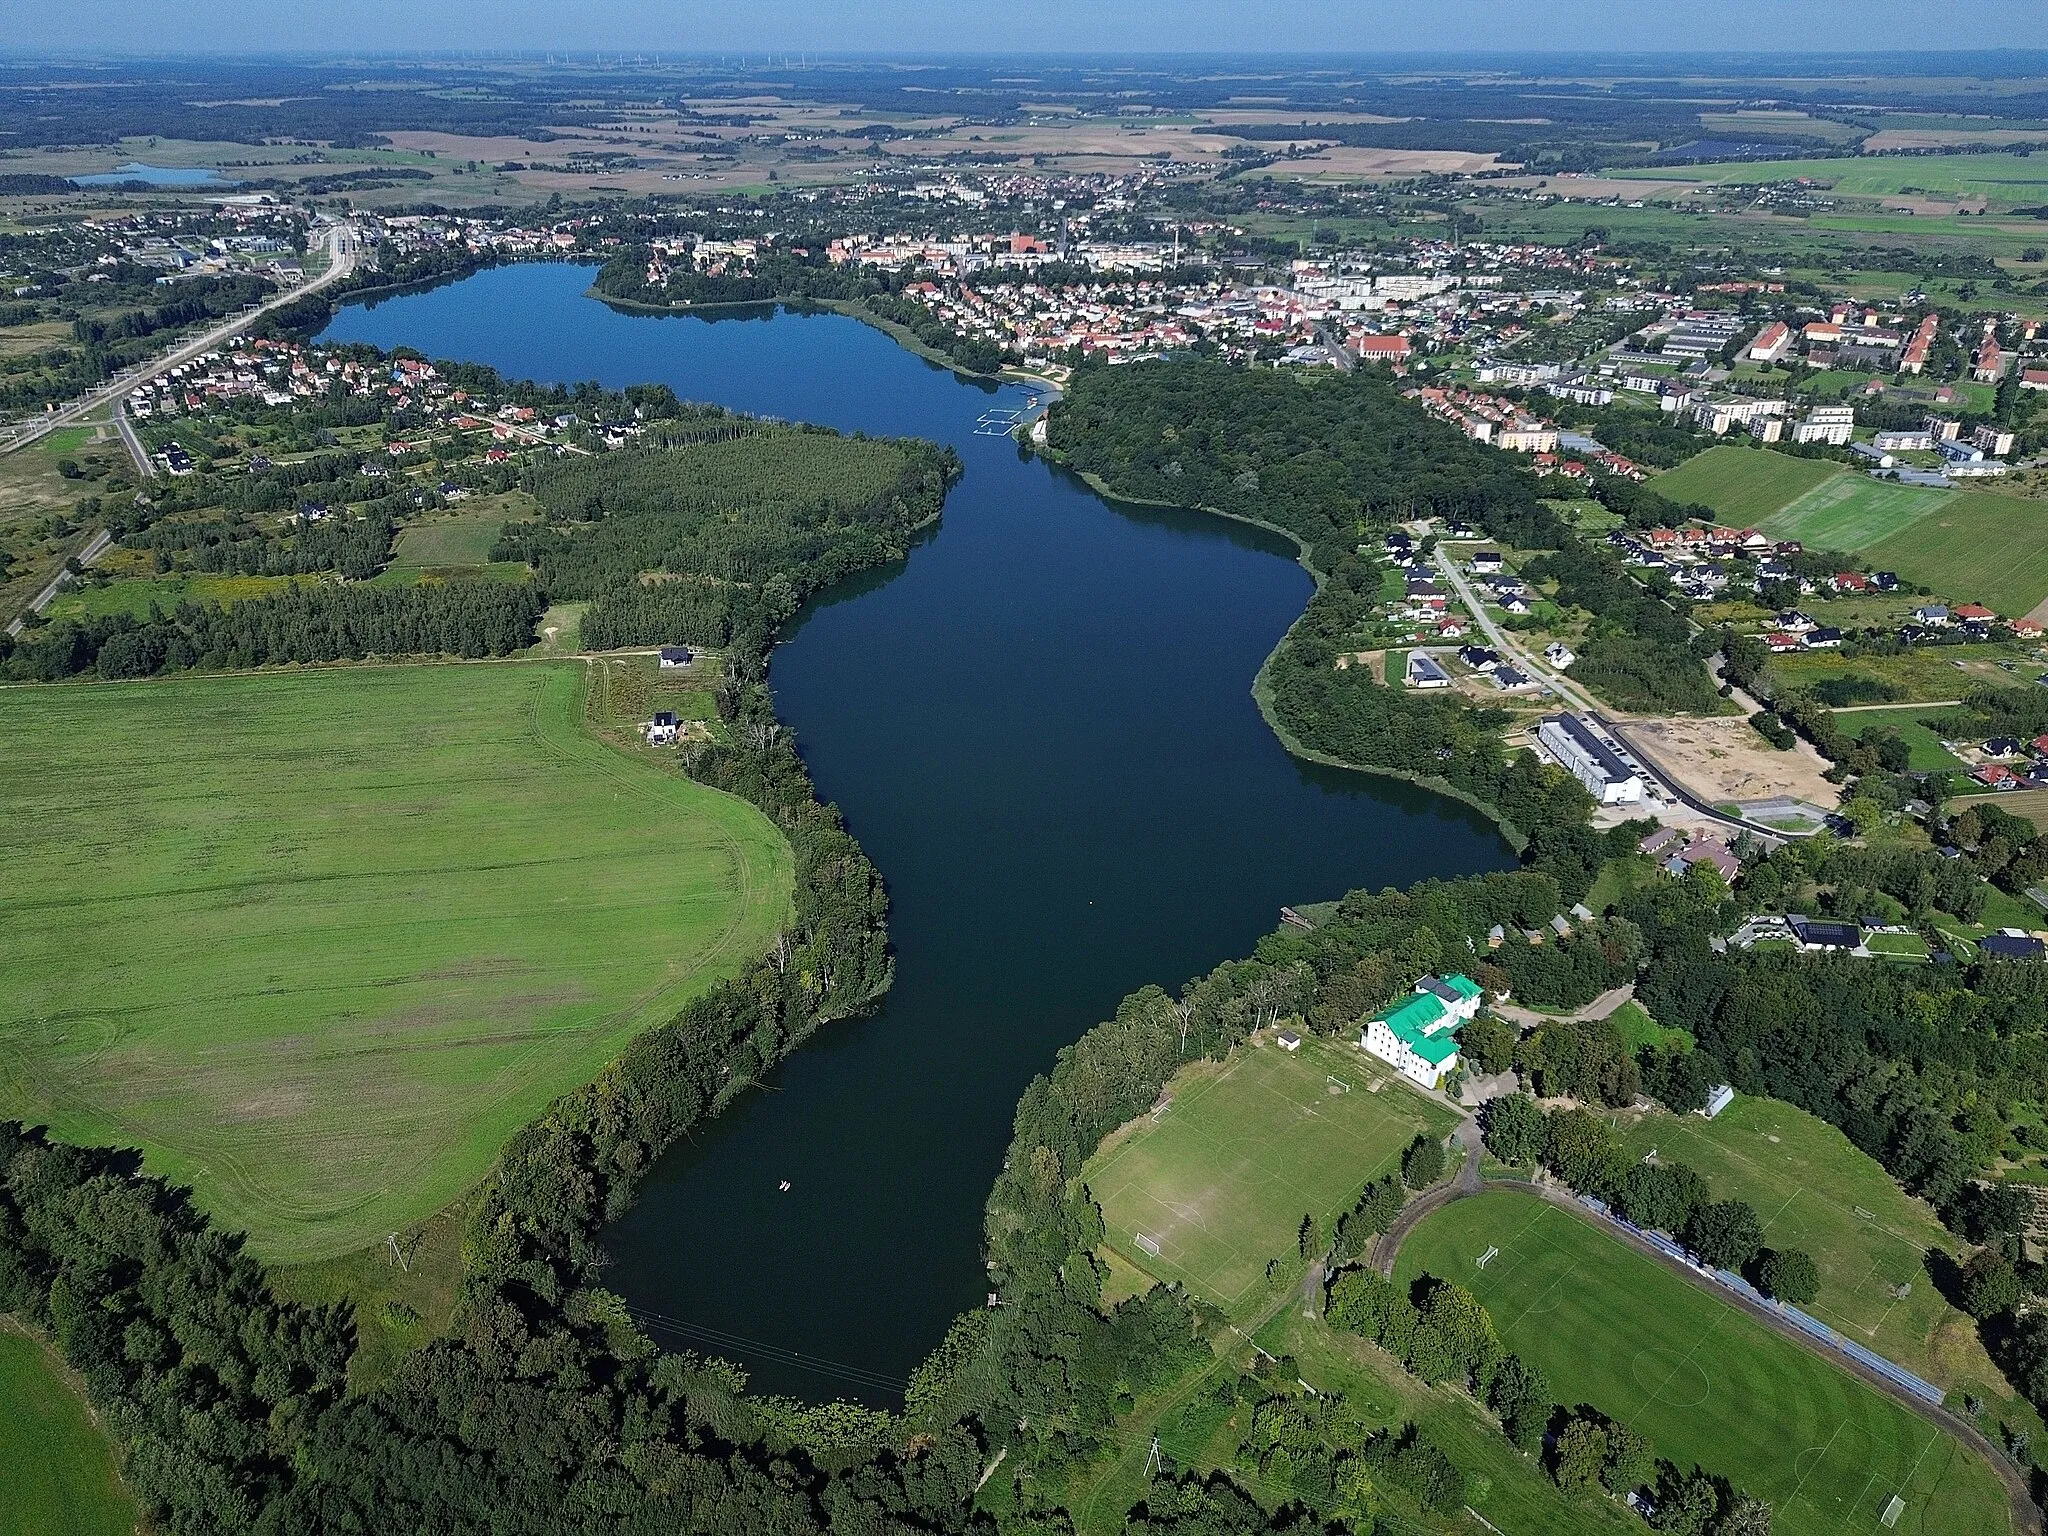 Image of Choszczno